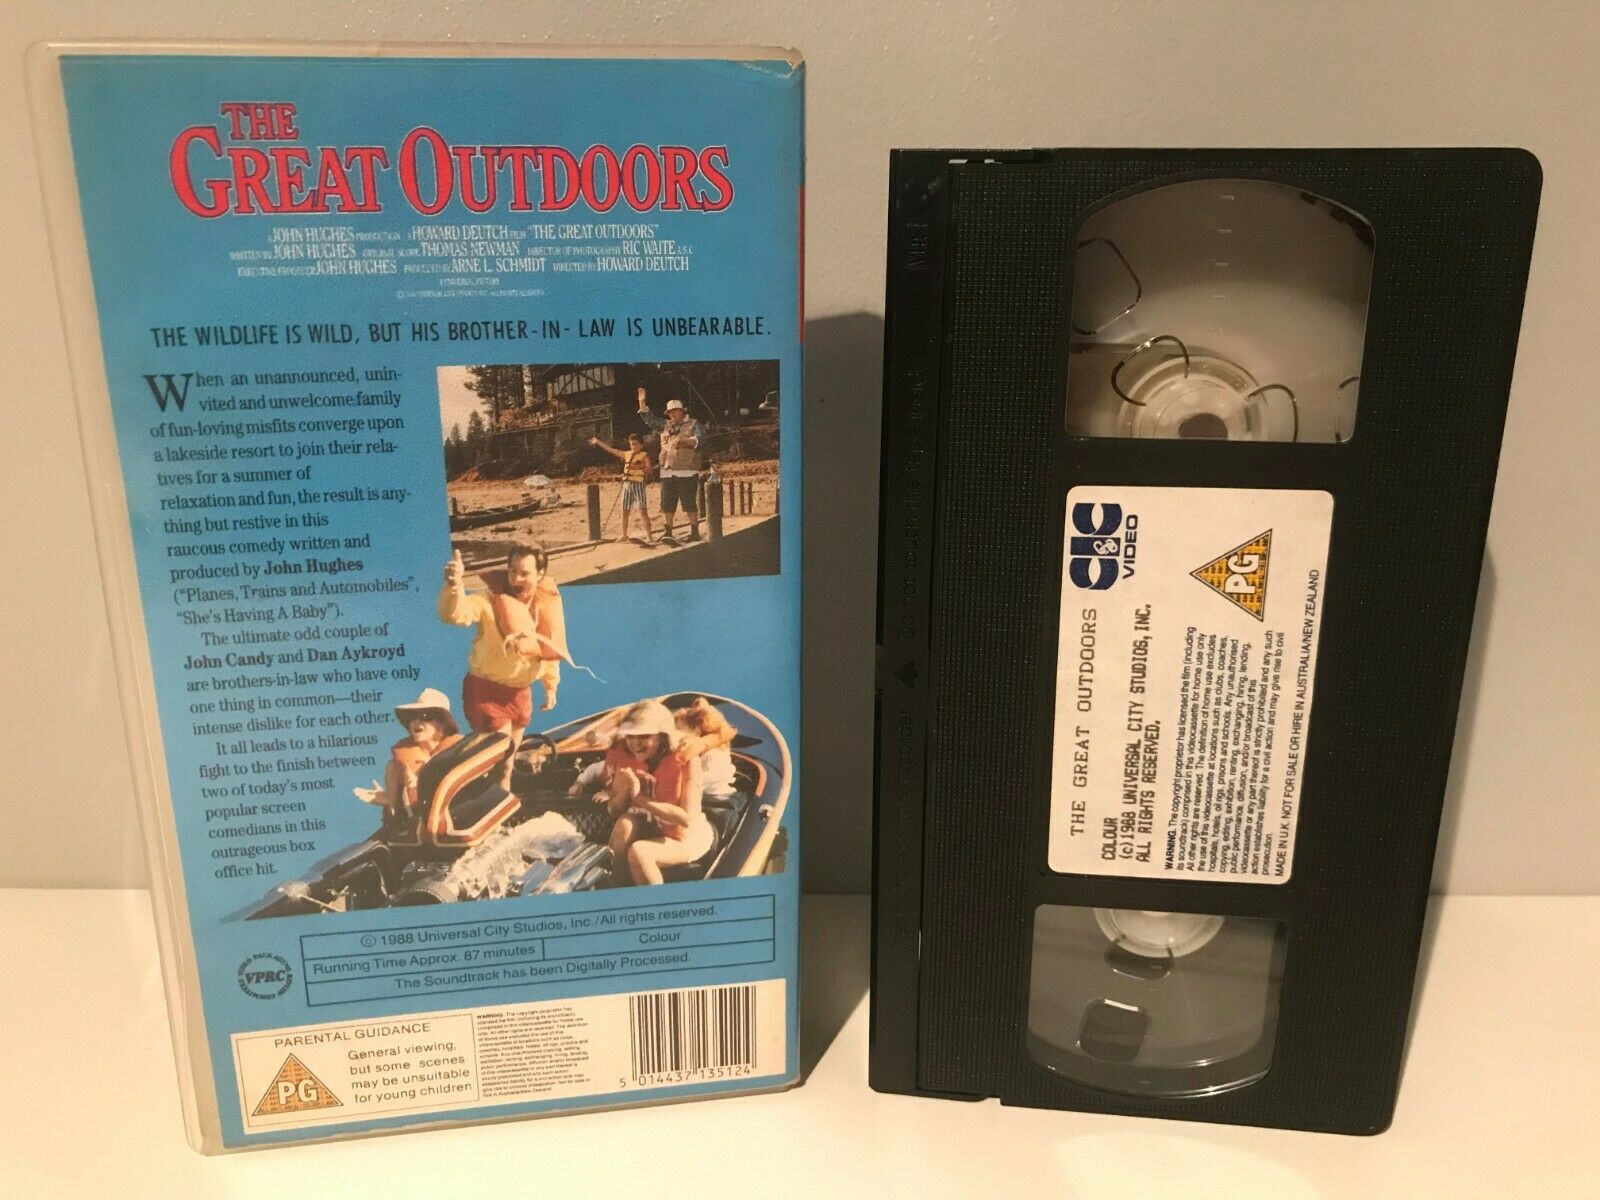 The Great Outdoors (1988): Dan Aykroyd / John Candy - Adventure Comedy - Pal VHS-